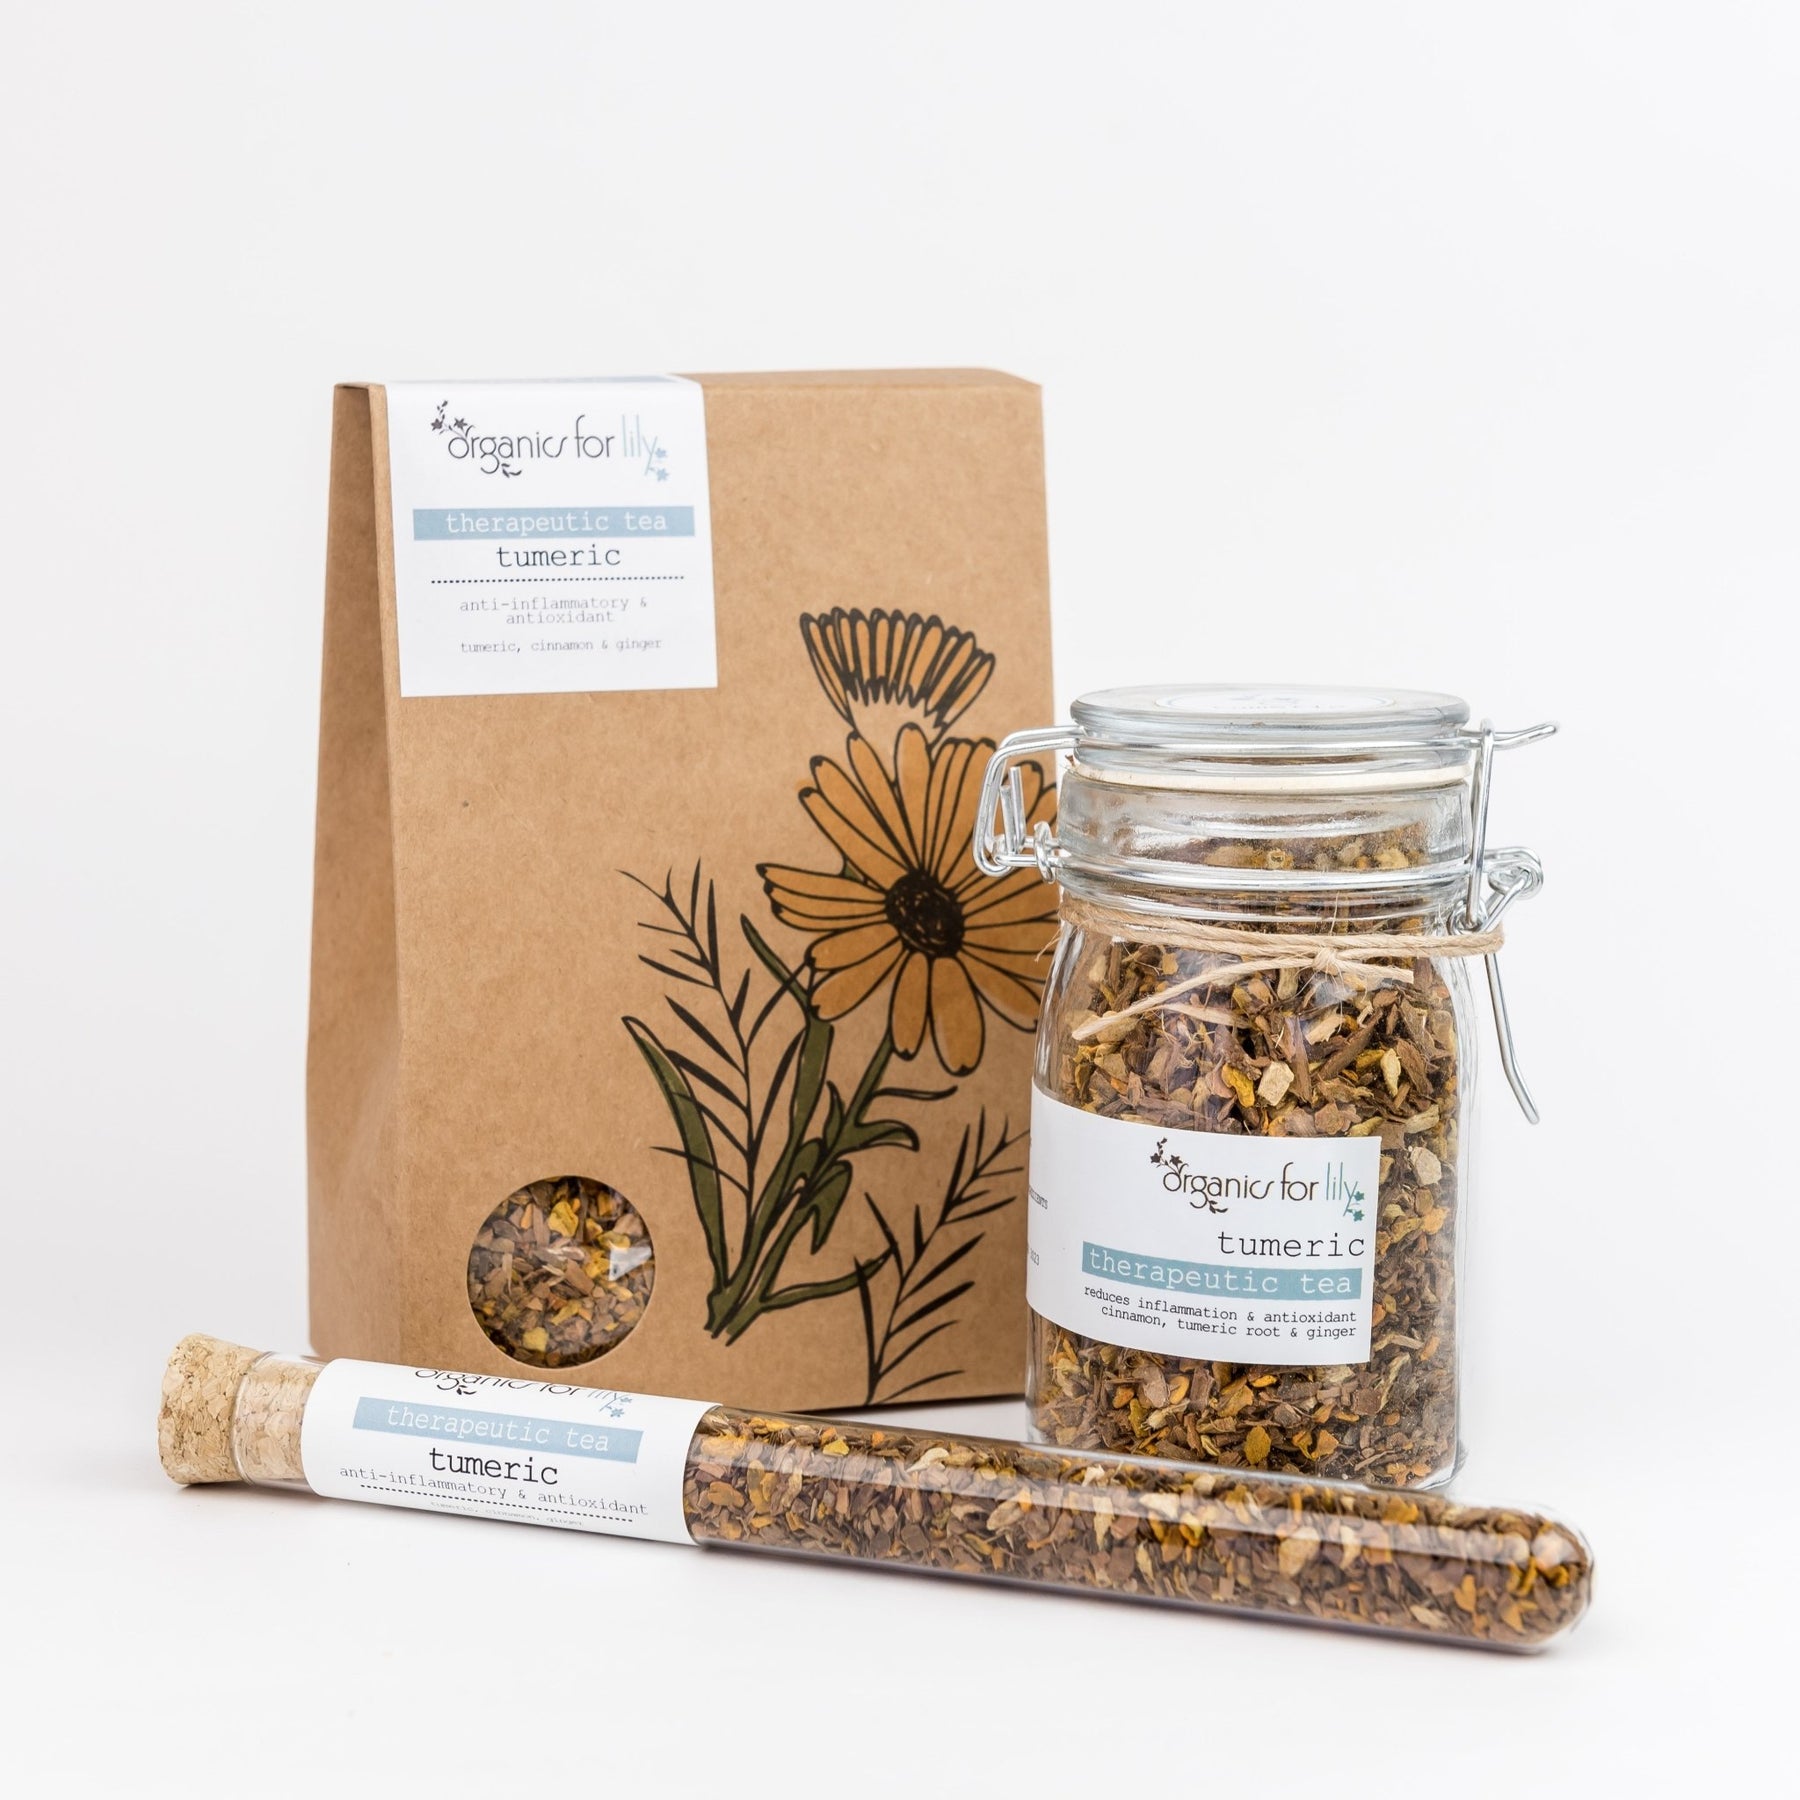 Organics for Lily Turmeric tea 100g